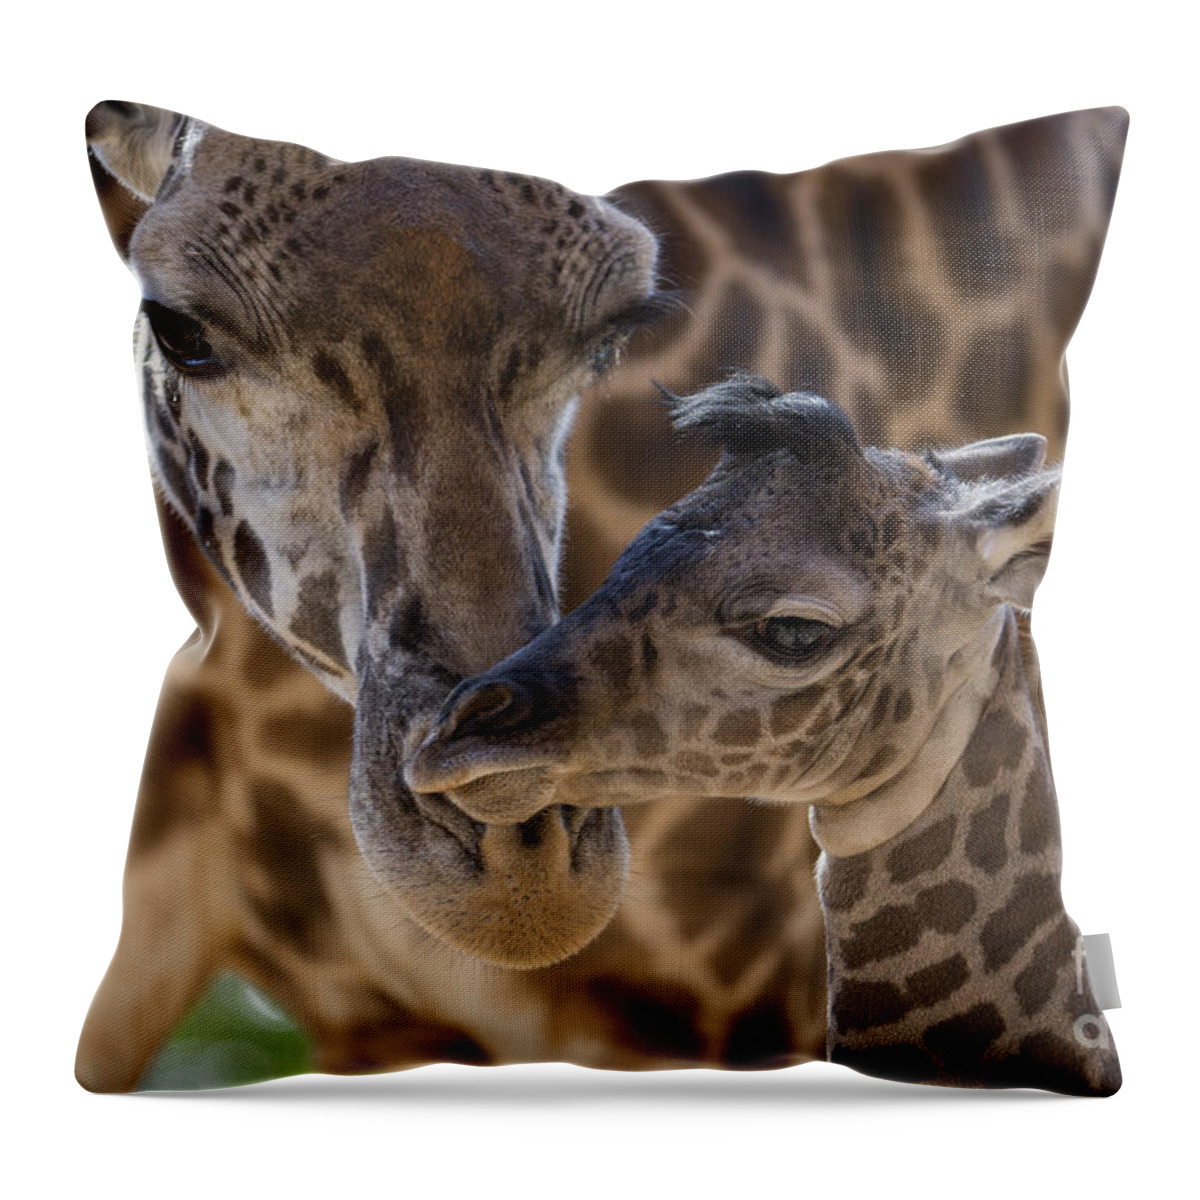 San Diego Zoo Throw Pillow featuring the photograph Masai Giraffe And Calf by San Diego Zoo